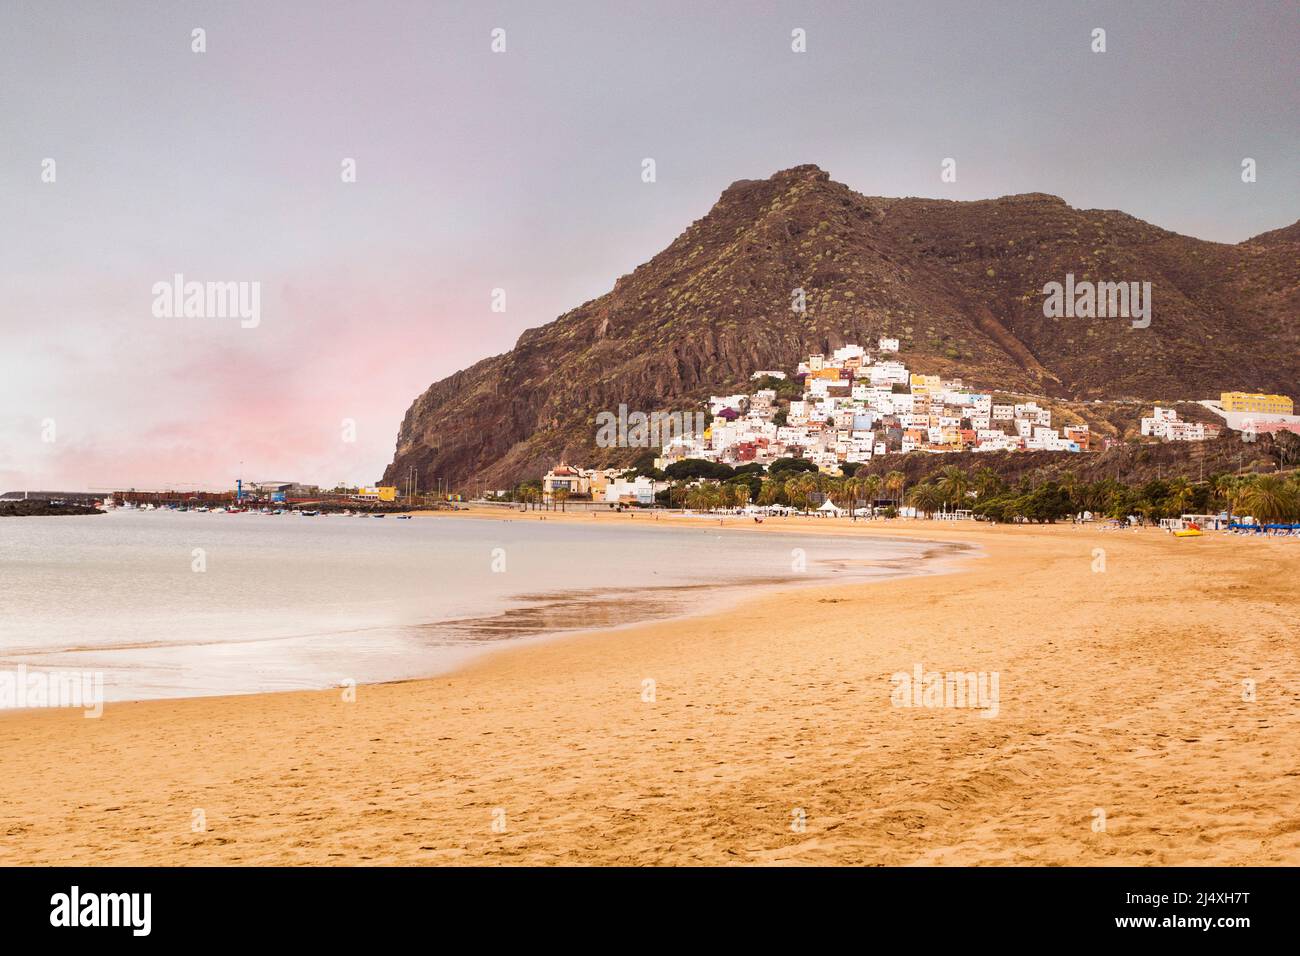 Playa de Las Teresitas. La sabbia bianca artificiale, famosa spiaggia di Santa Cruz de Tenerife, Spagna. Foto Stock